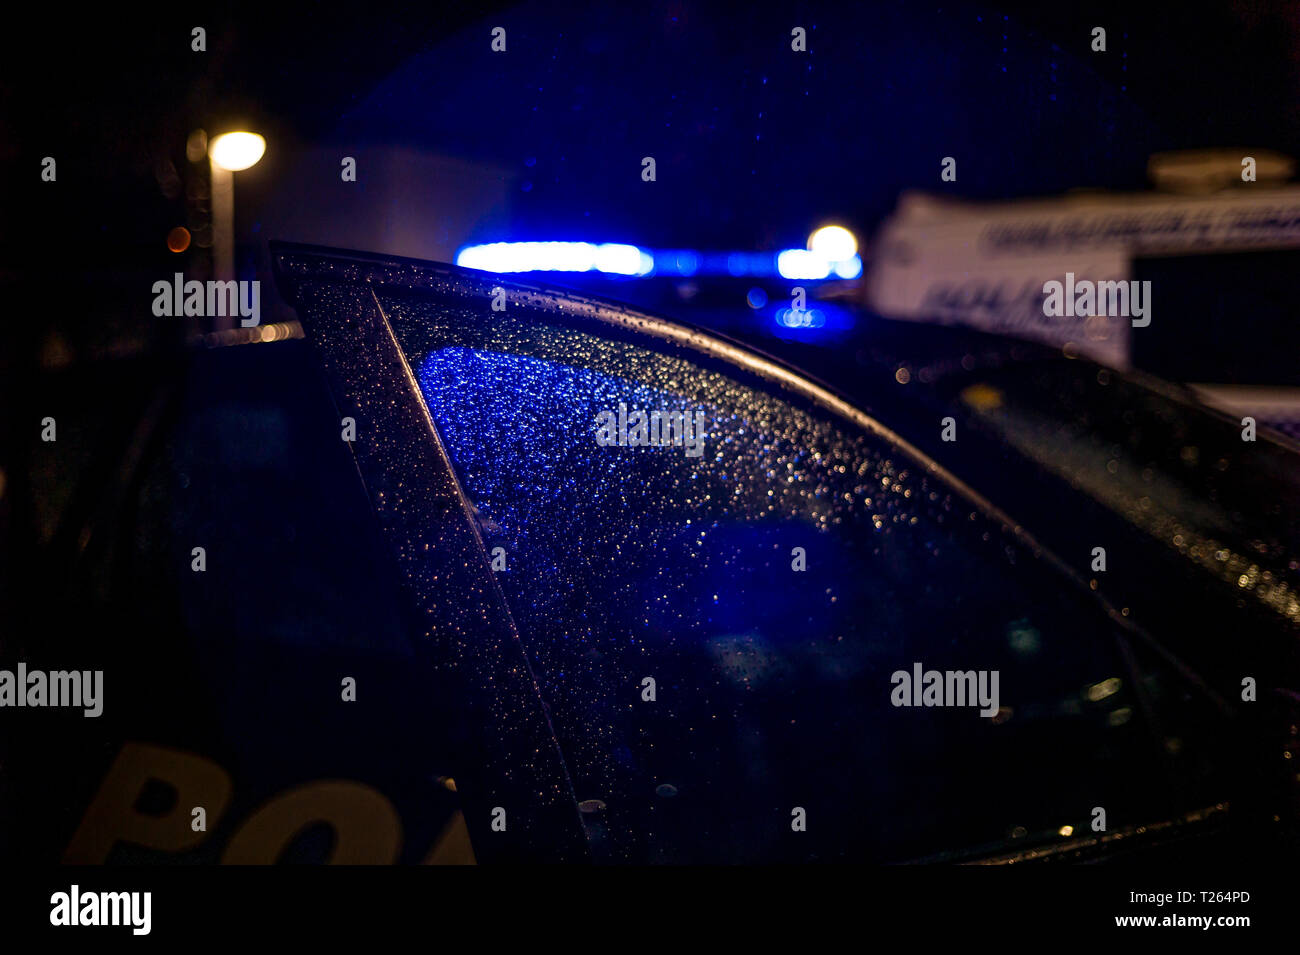 Spain, Madrid, rain falling on the window of police car at night Stock Photo